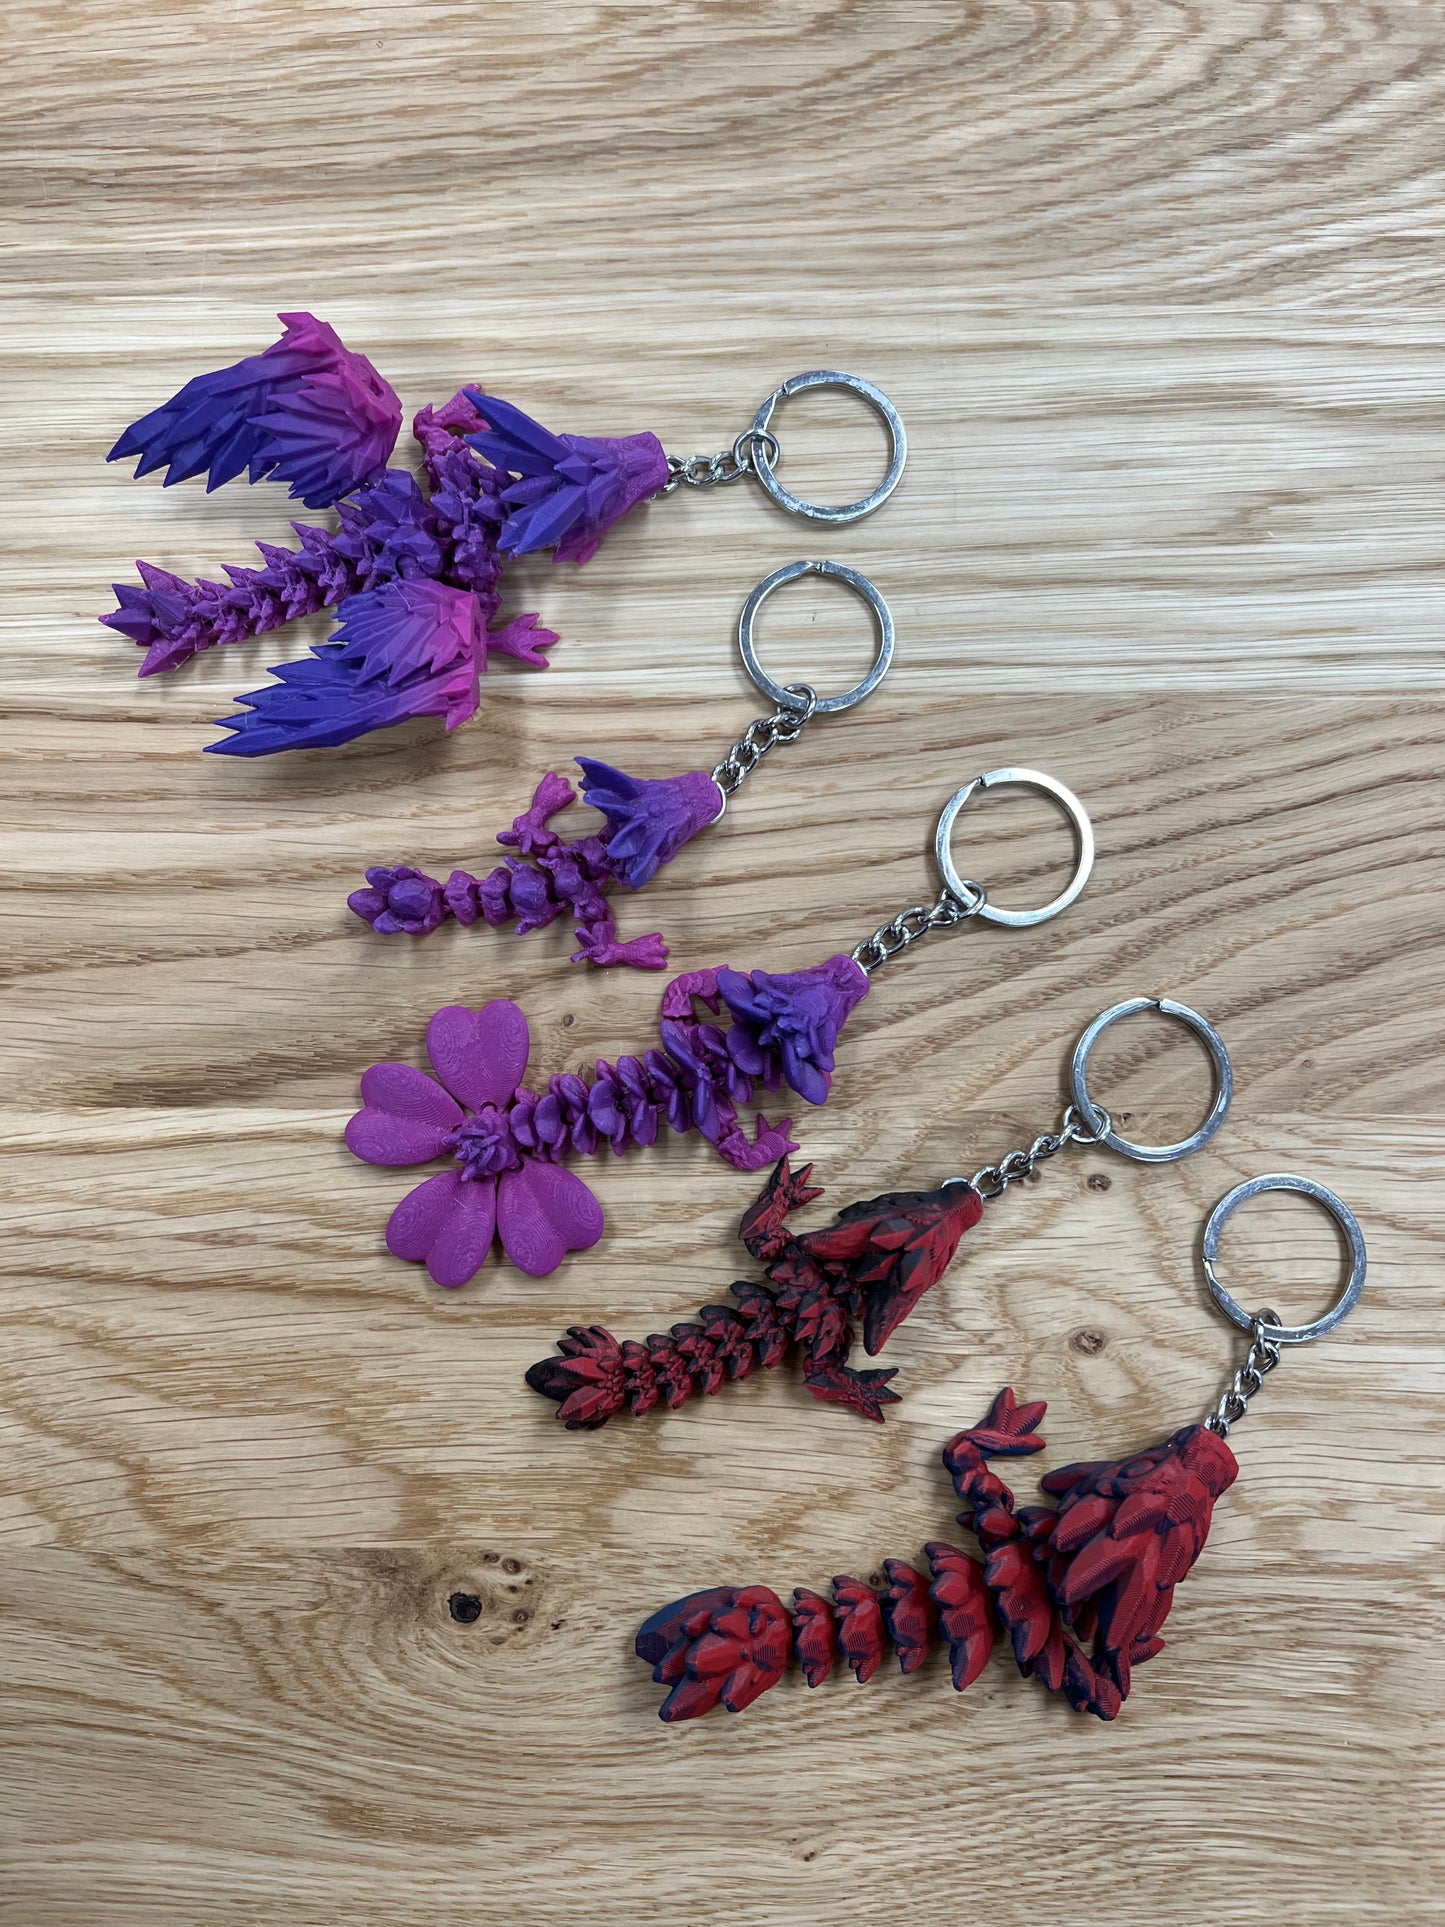 3D Printed Dragon Keychain